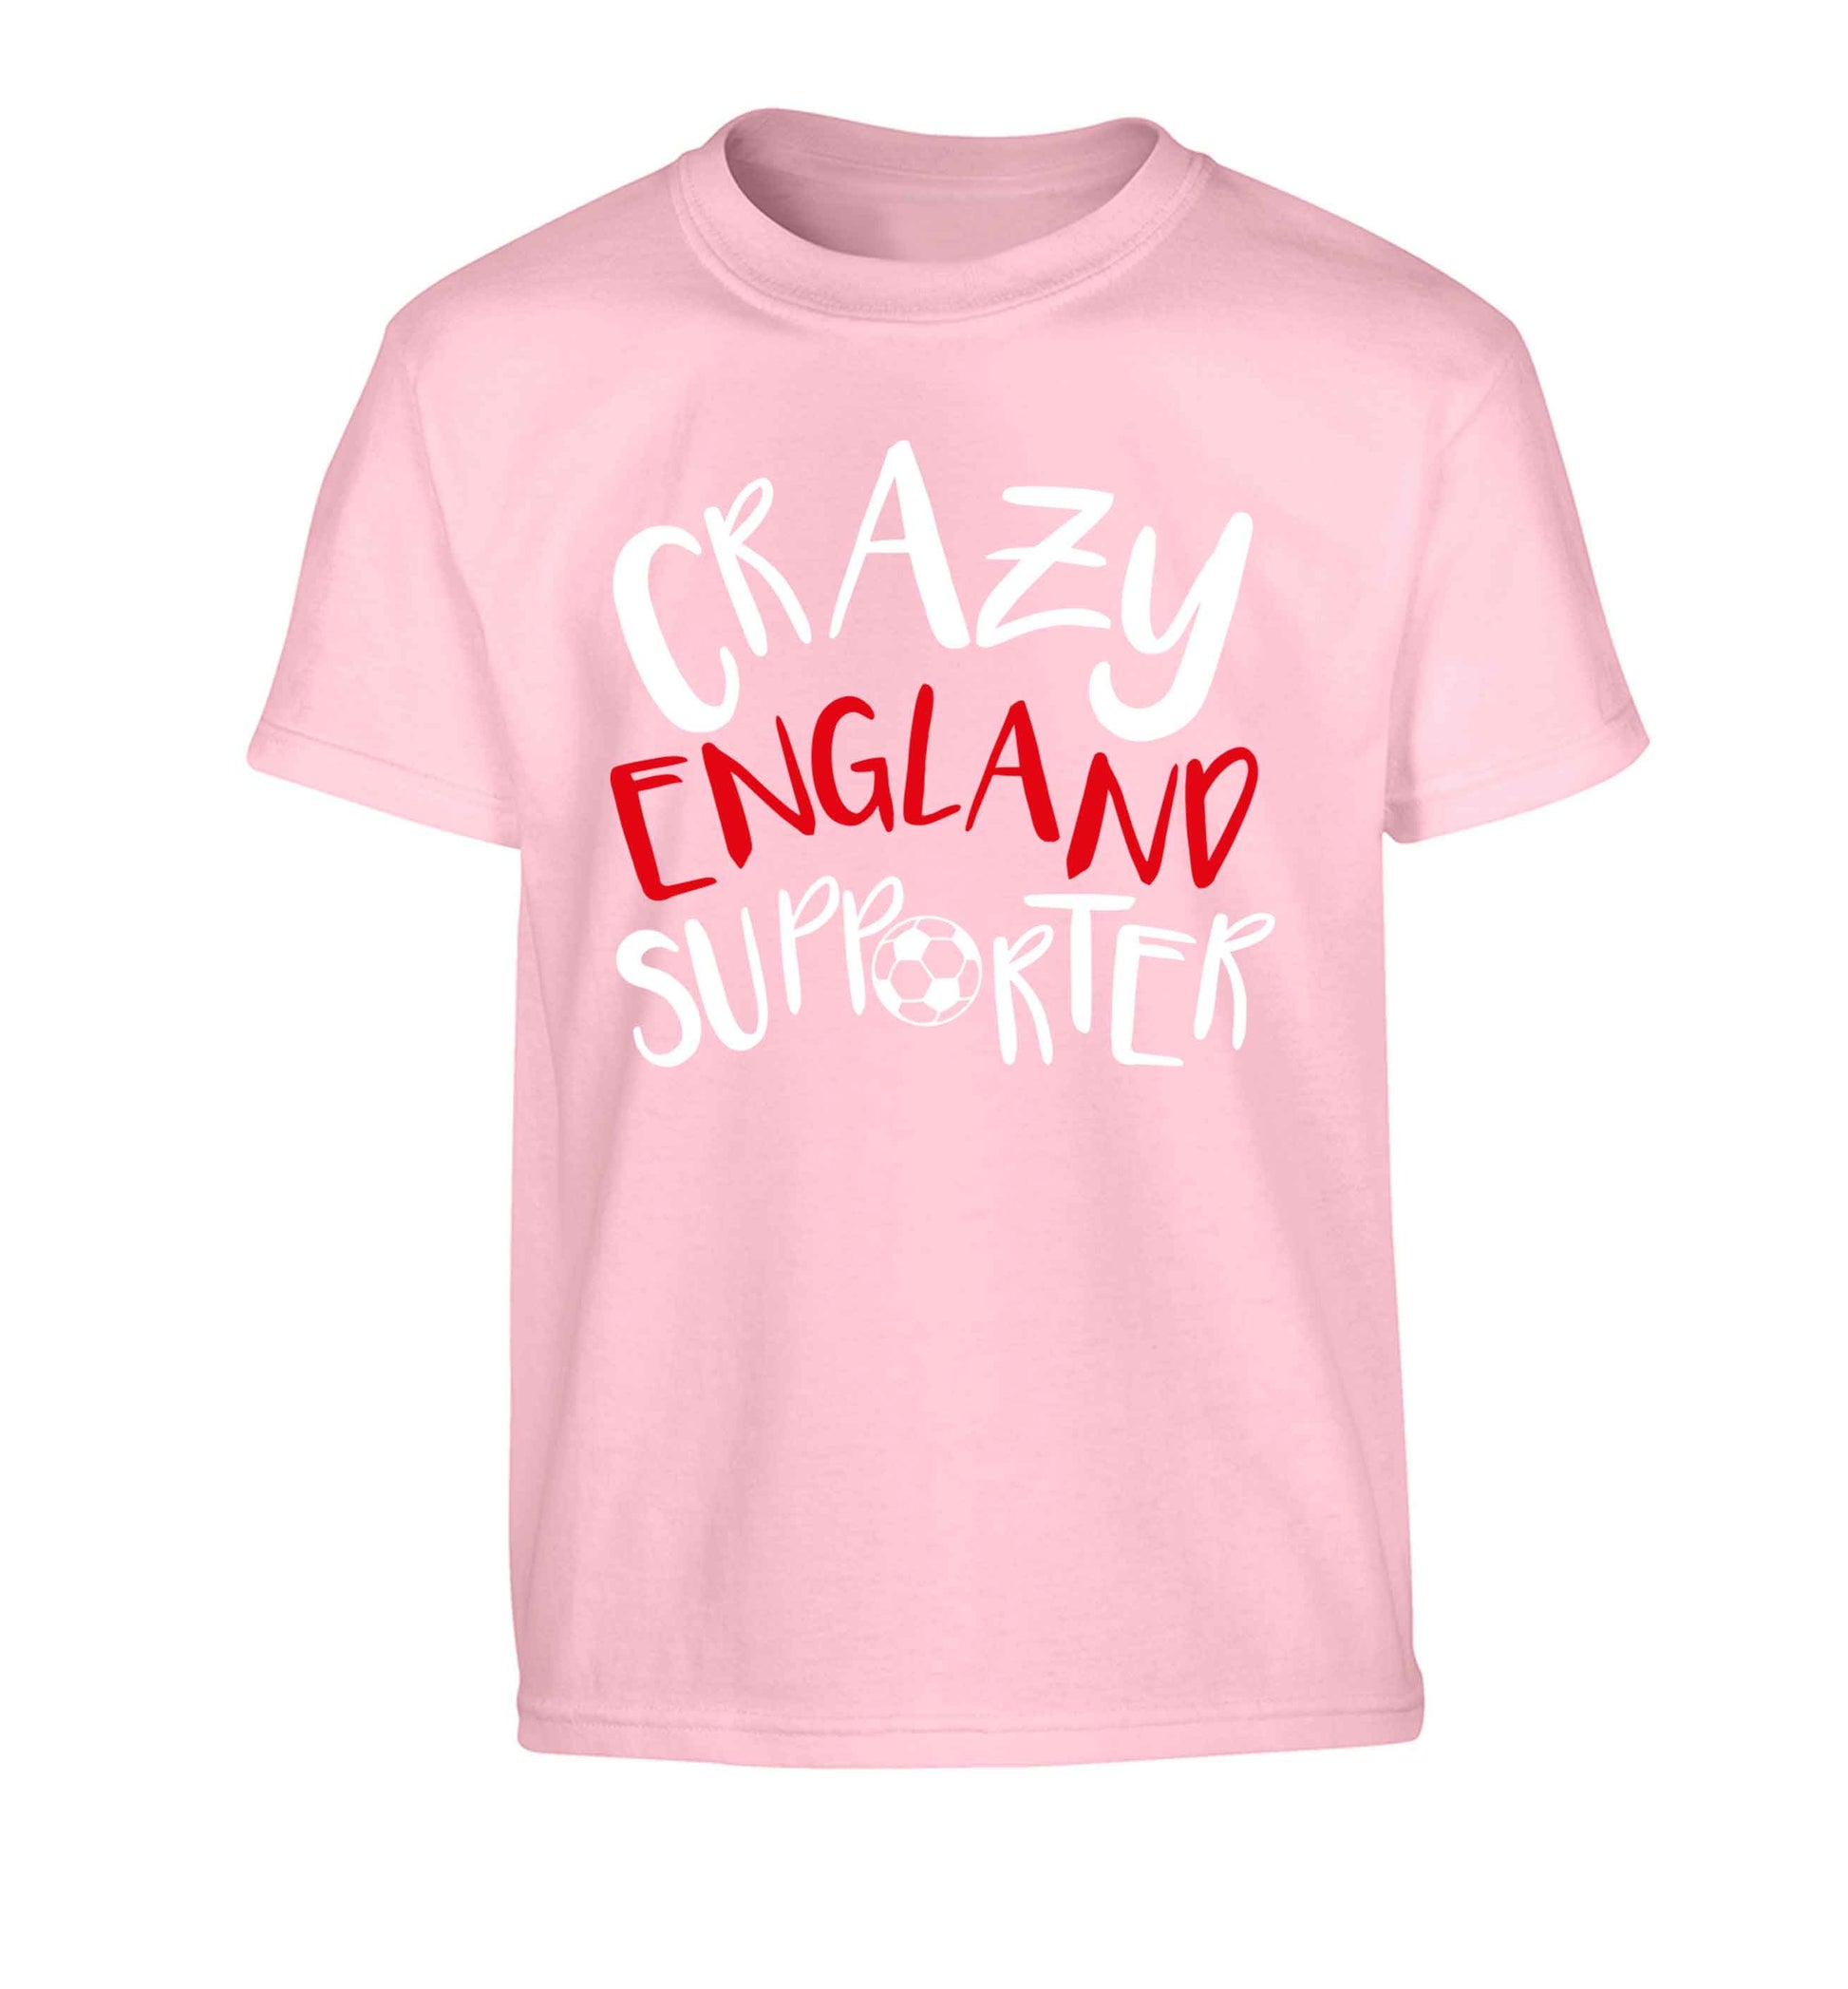 Crazy England supporter Children's light pink Tshirt 12-13 Years